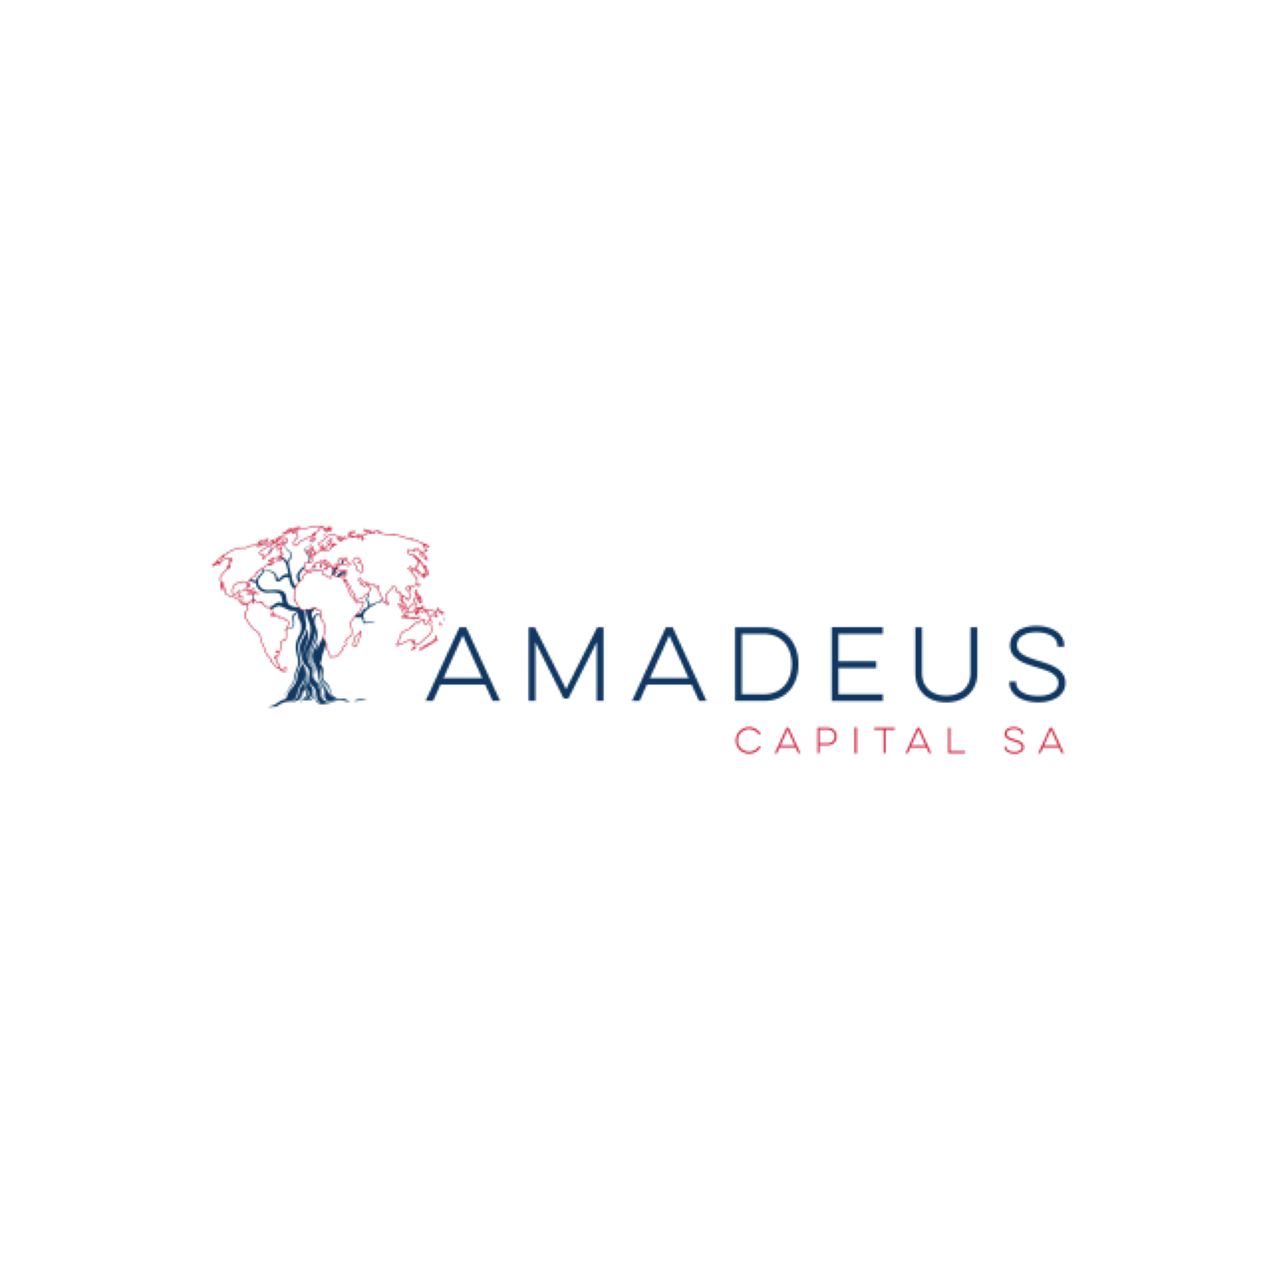 Discover more than 122 amadeus logo latest